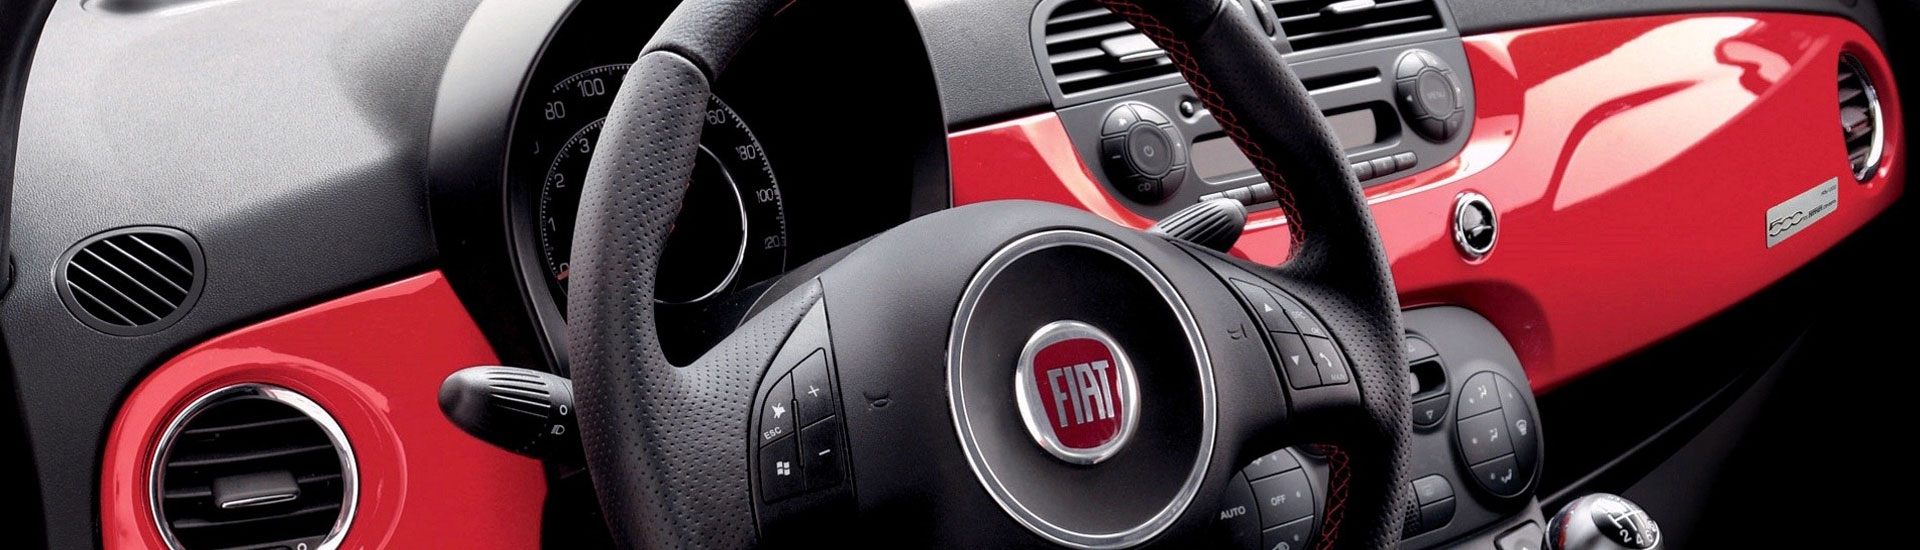 2017 Fiat 500x Custom Dash Kits